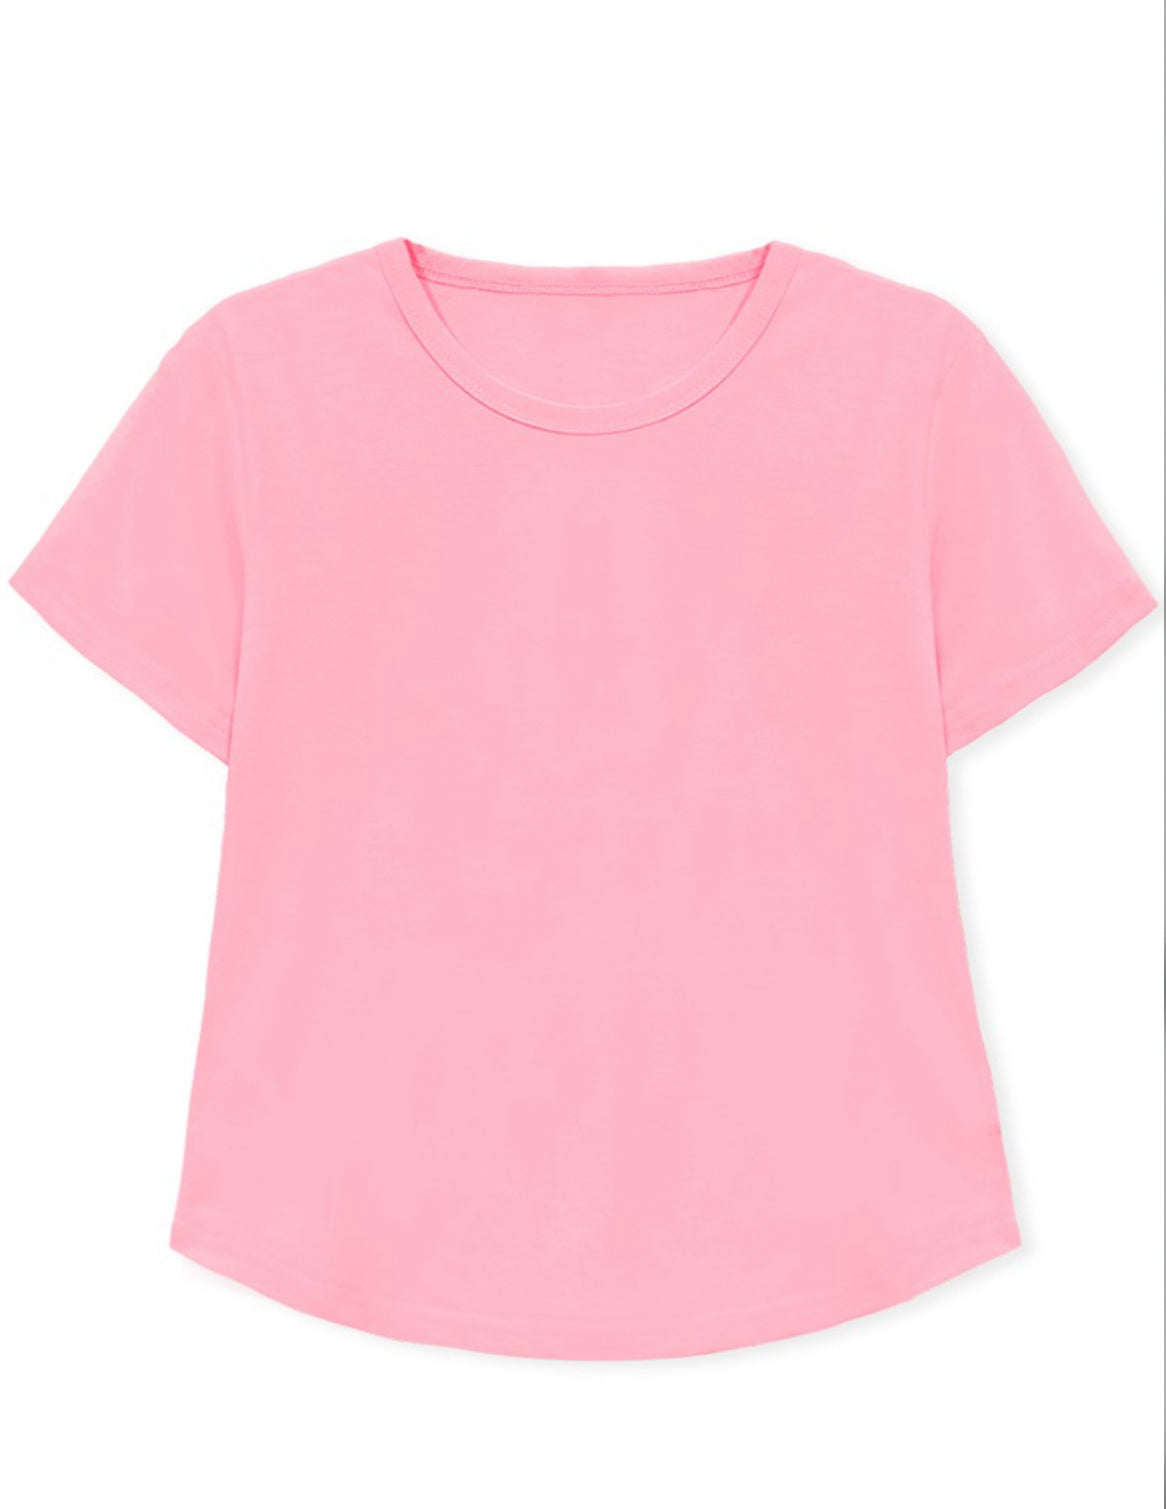 Kids Pink shirt